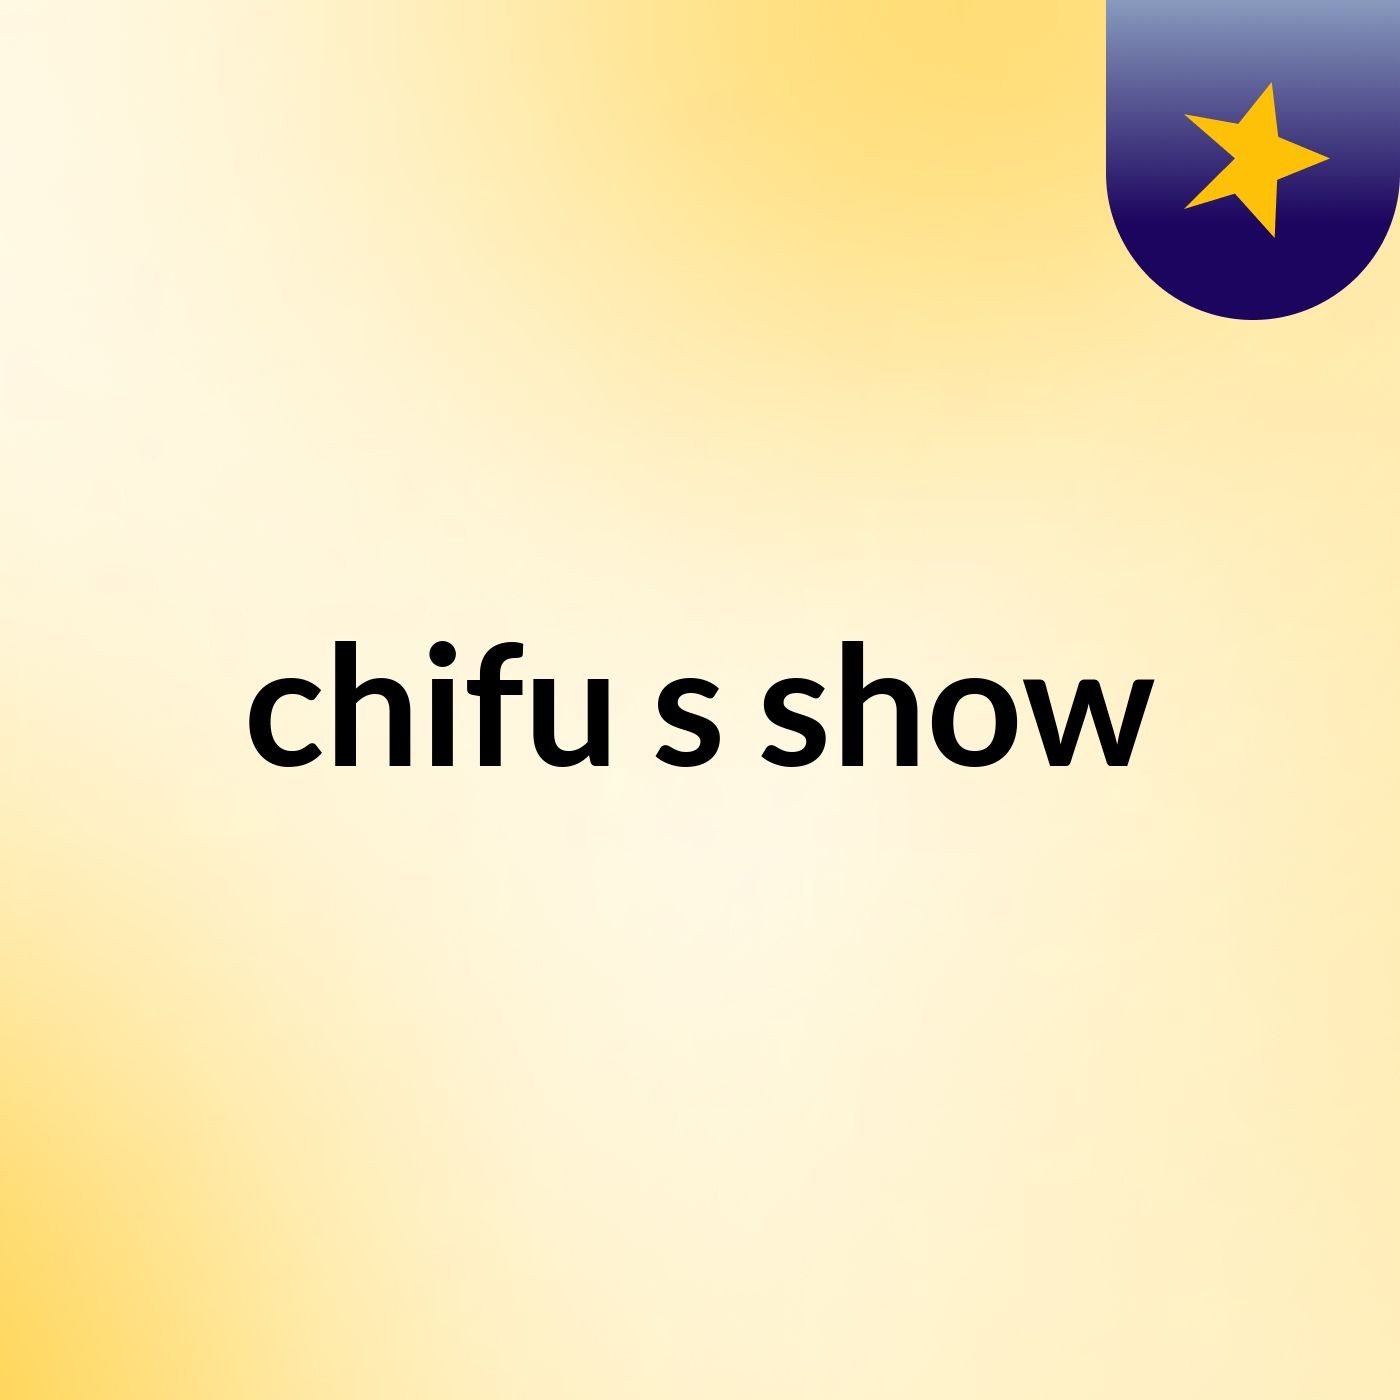 chifu's show